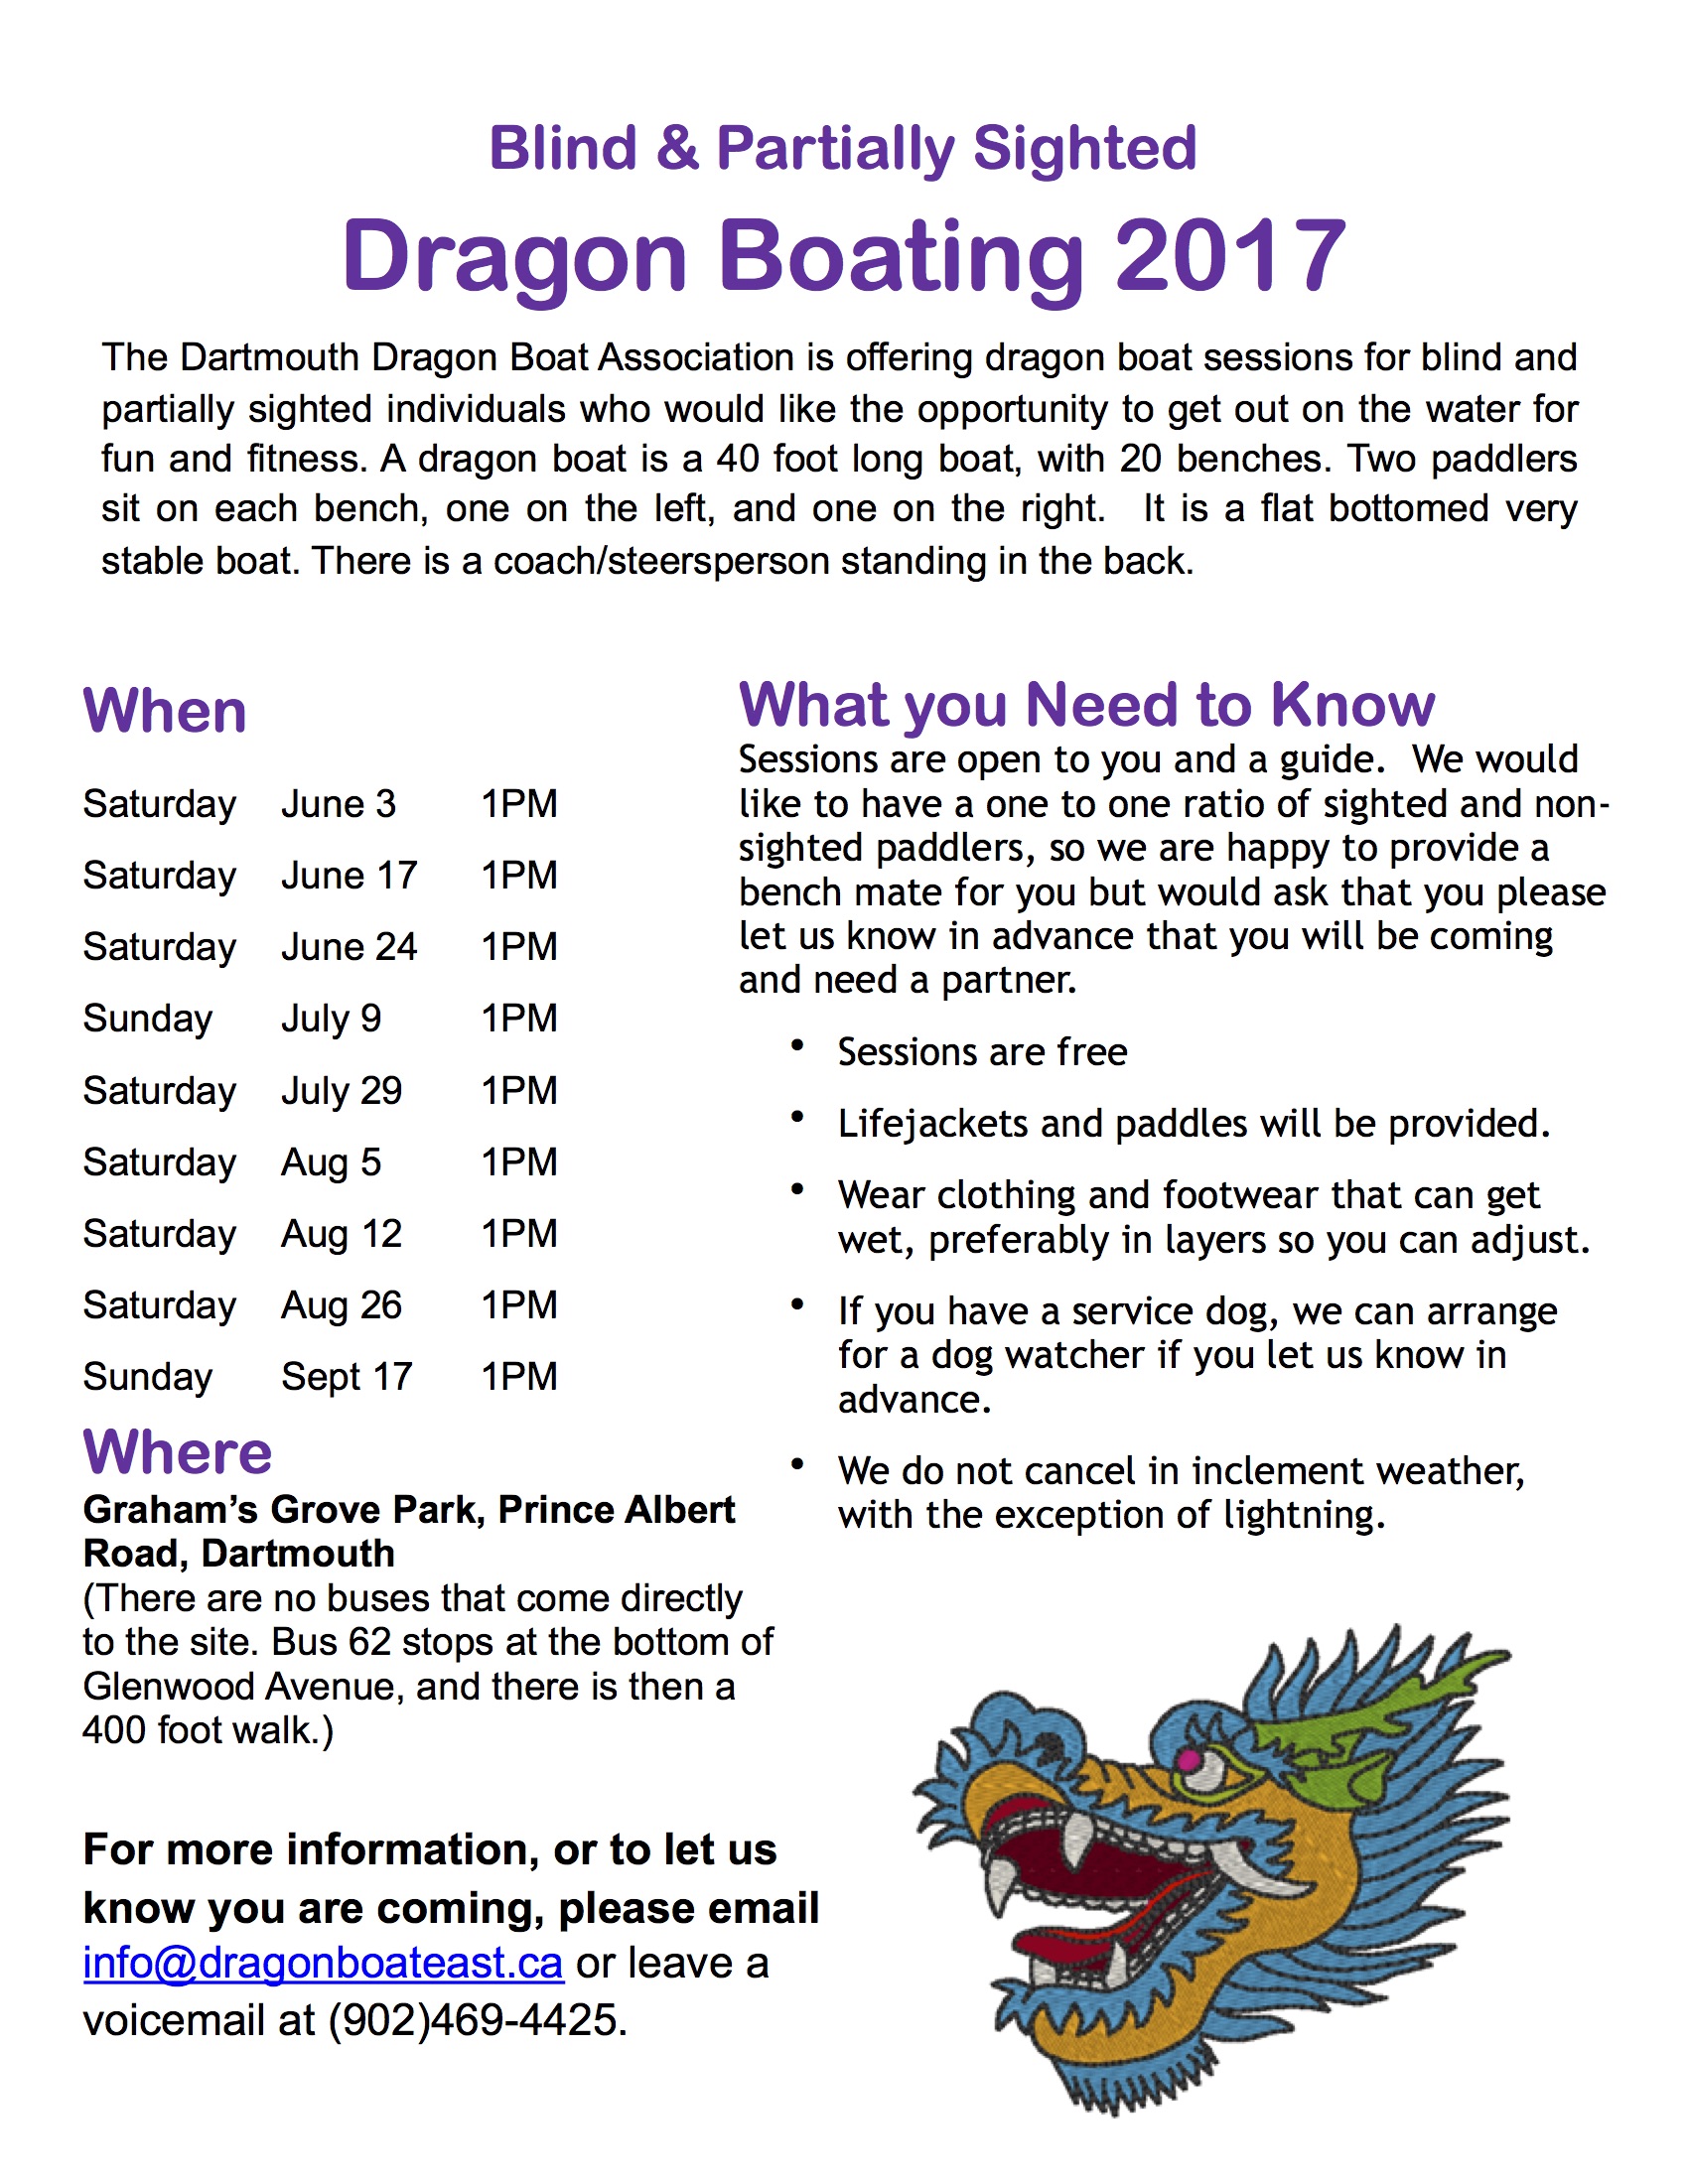 BPS Dragon Boating Info 2017